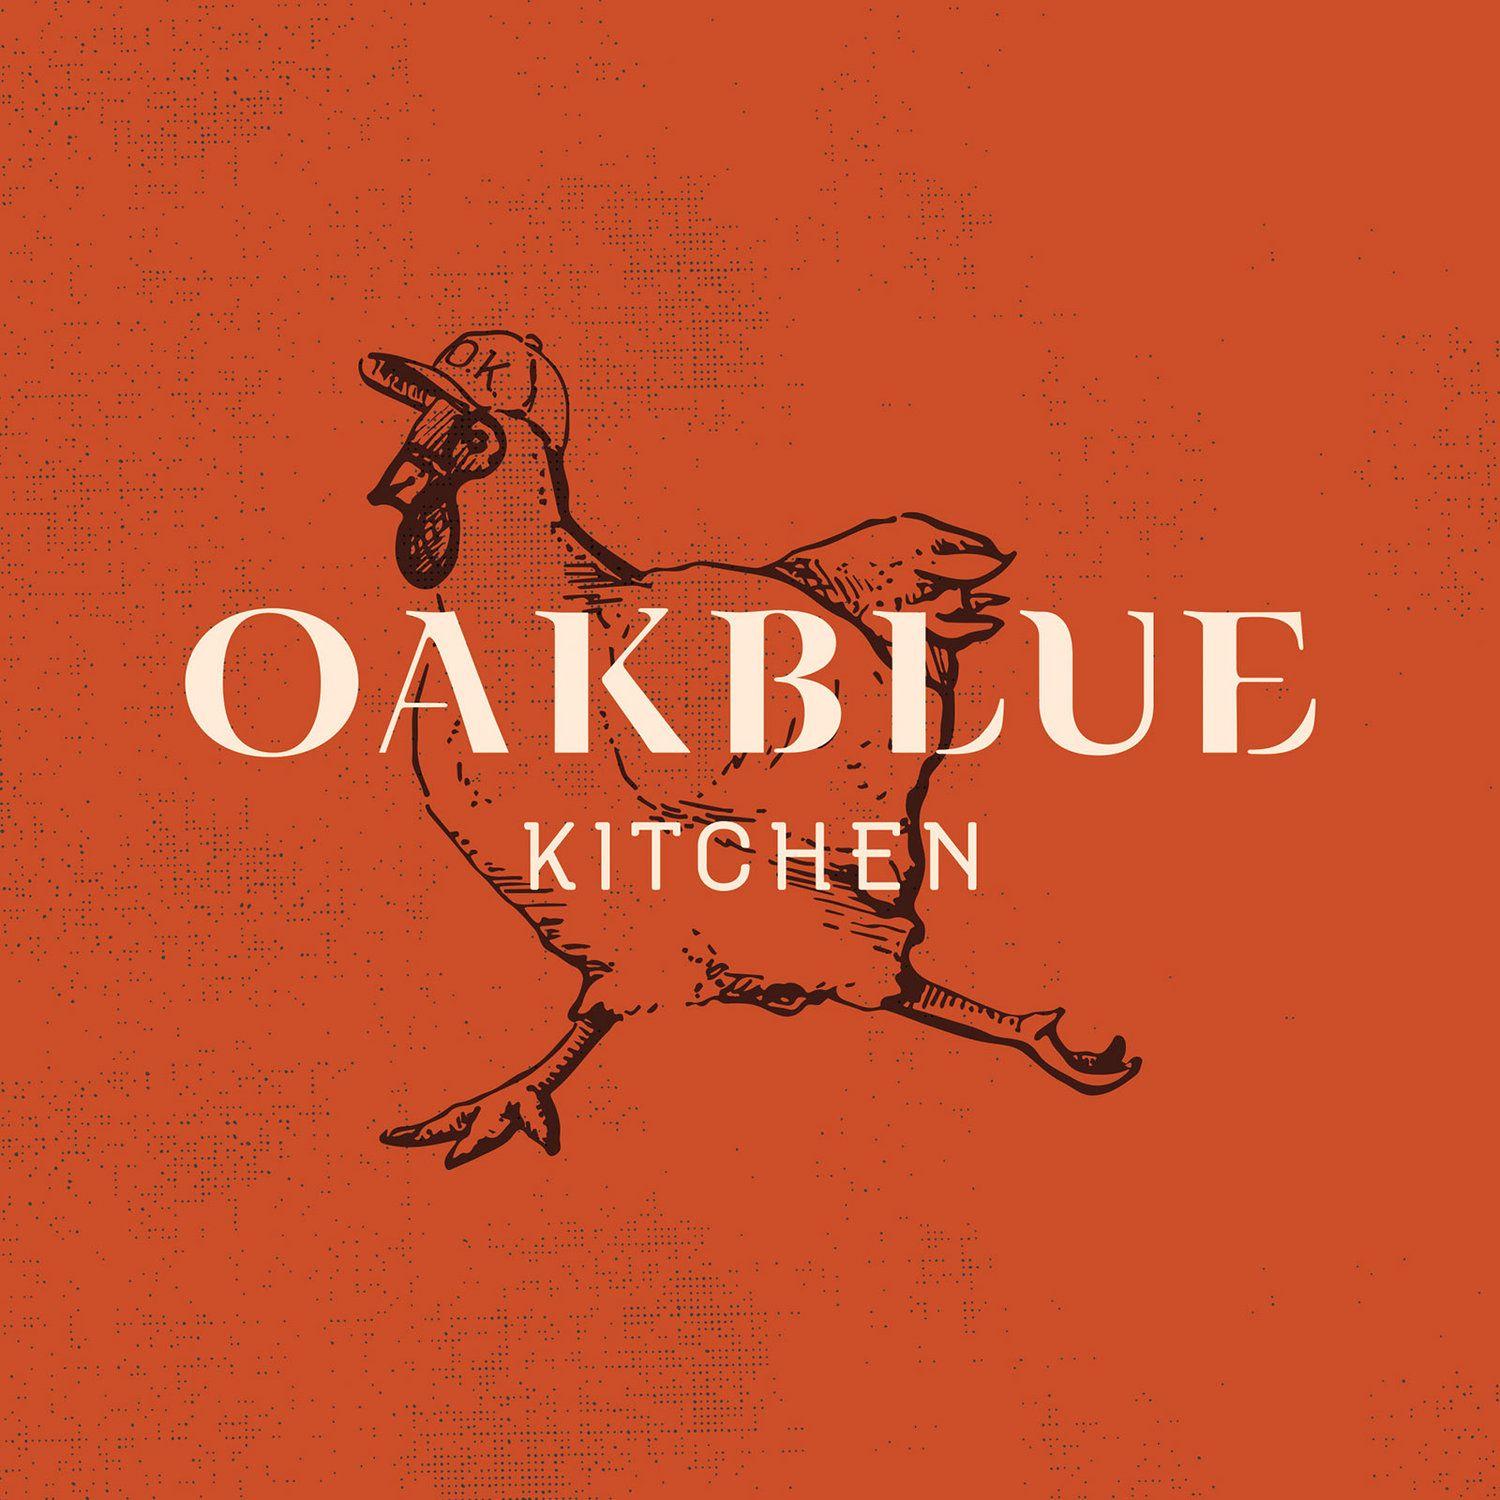 Restarants of Red Colored Logo - Oakblue Kitchen Branding